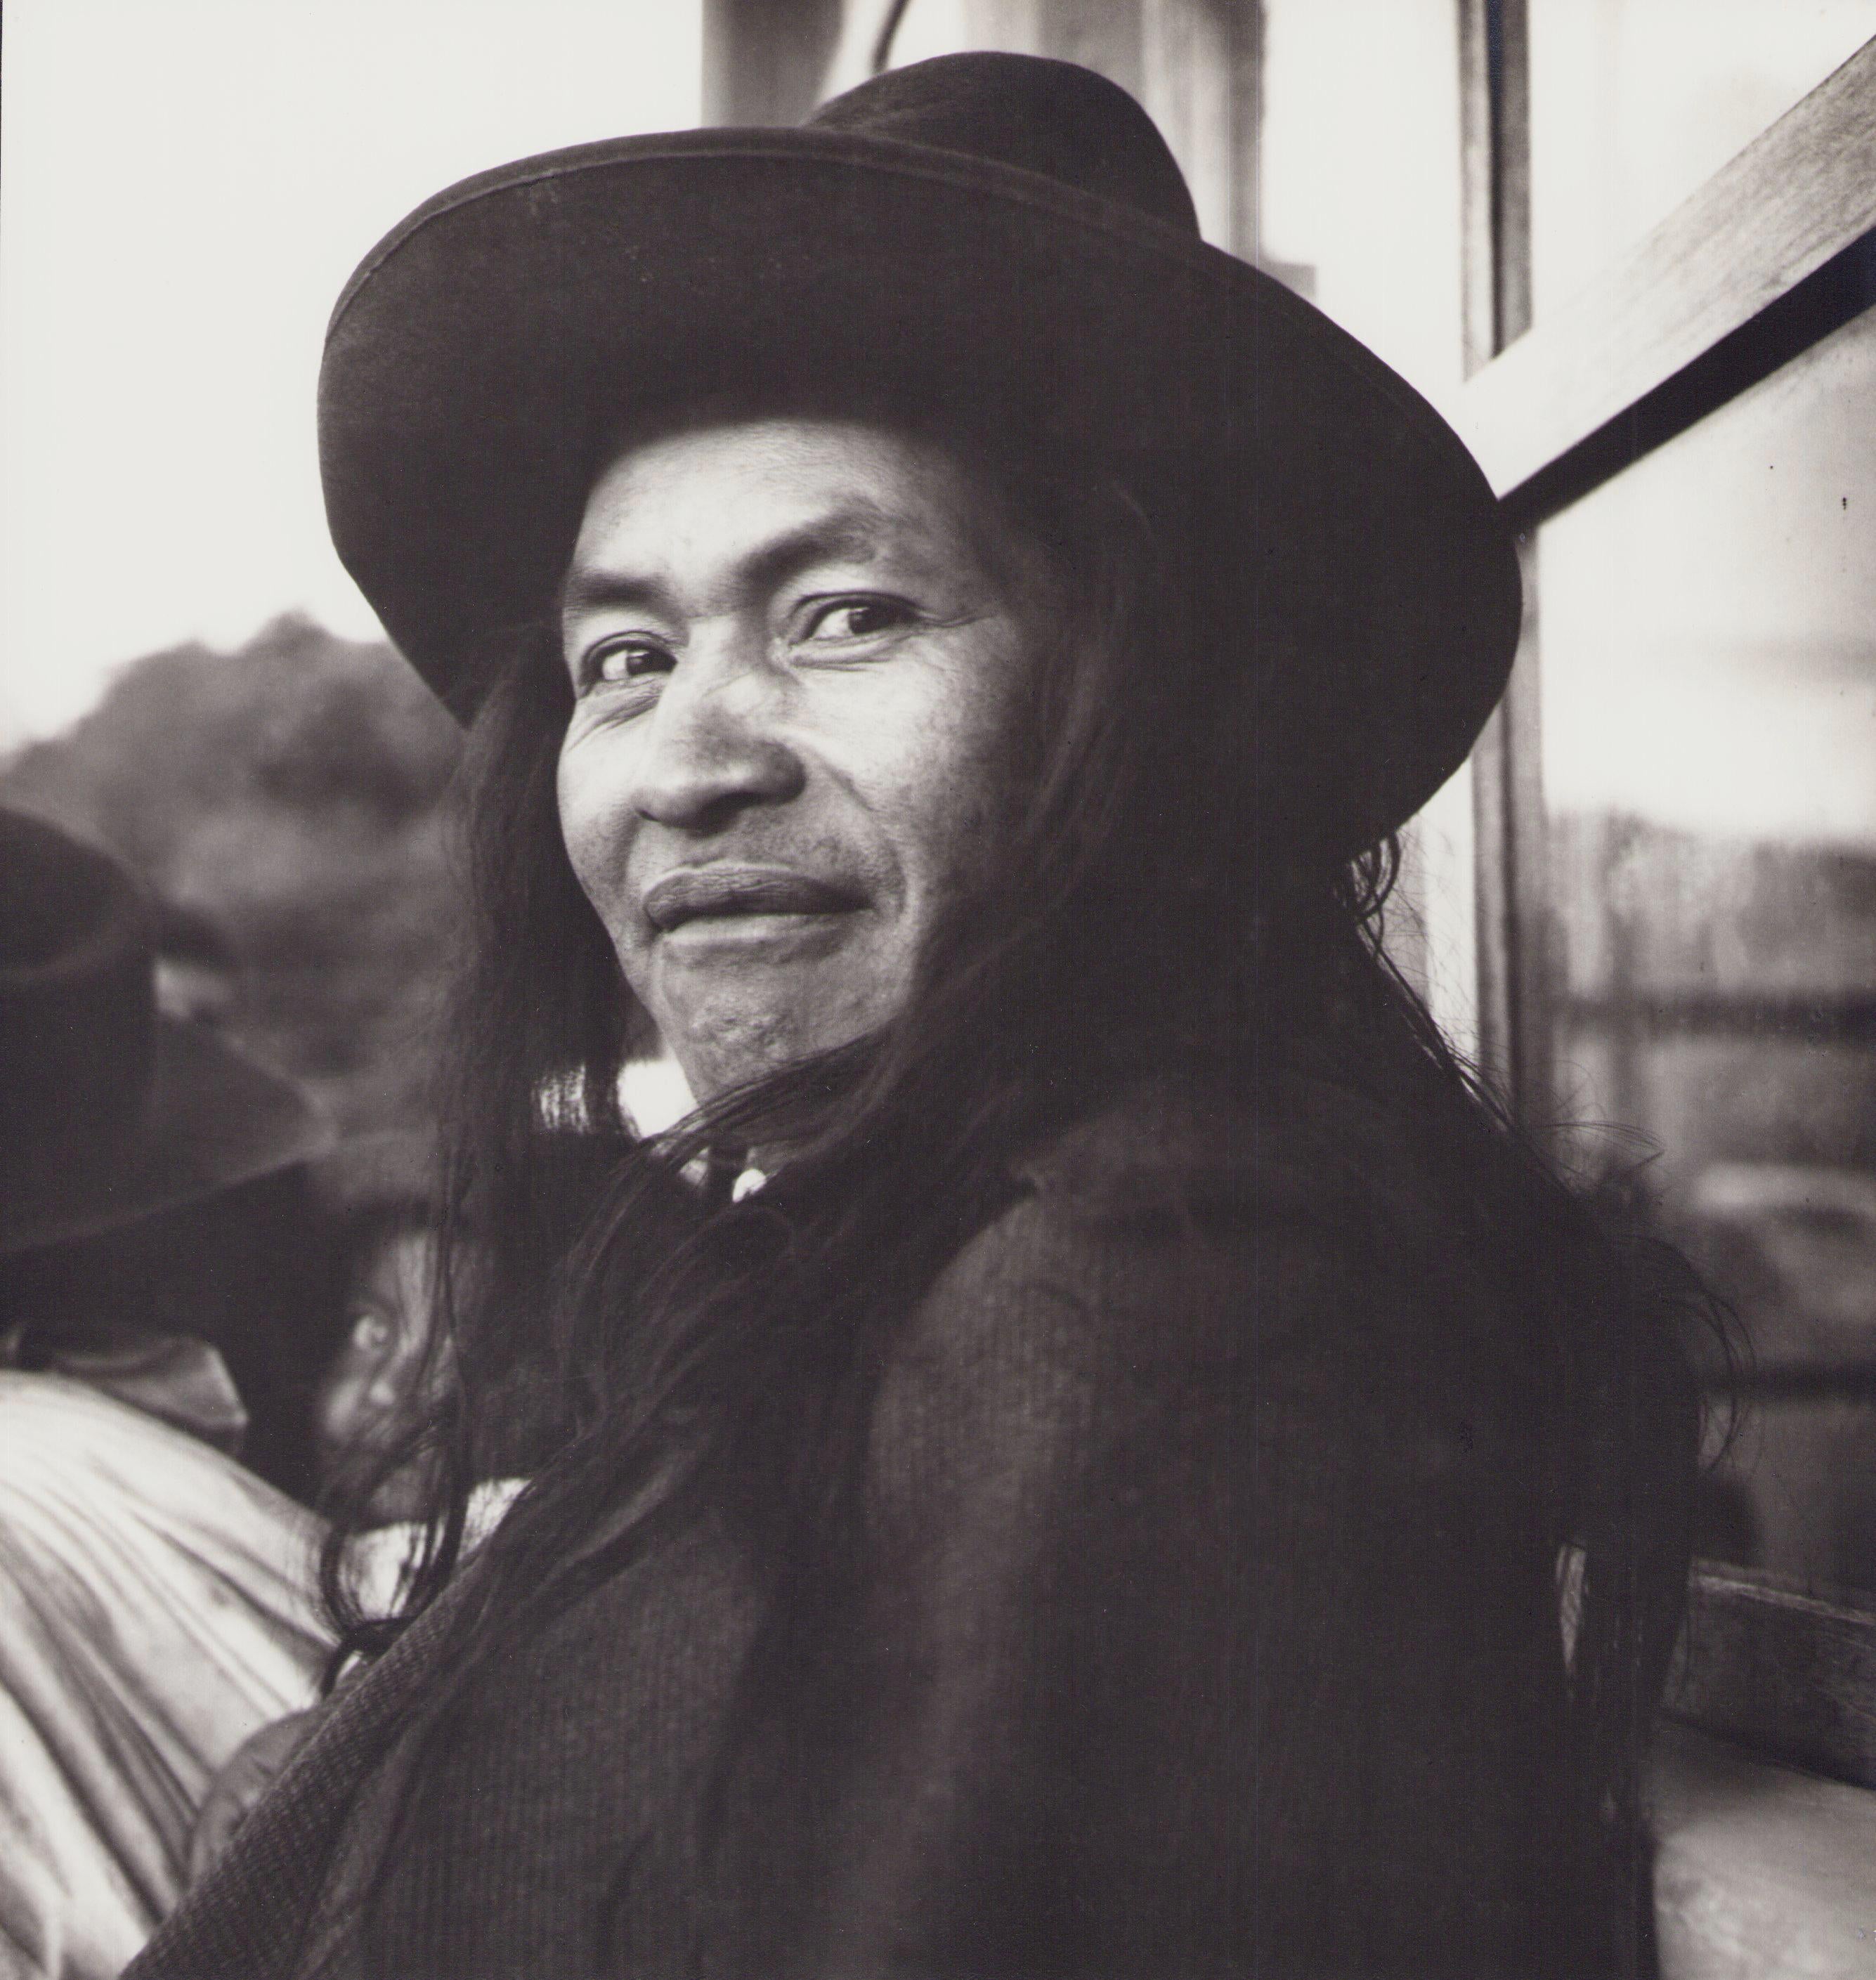 Hanna Seidel Portrait Photograph - Ecuador, Man, Black and White Photography, 1960s, 29, 9 x 22, 7 cm